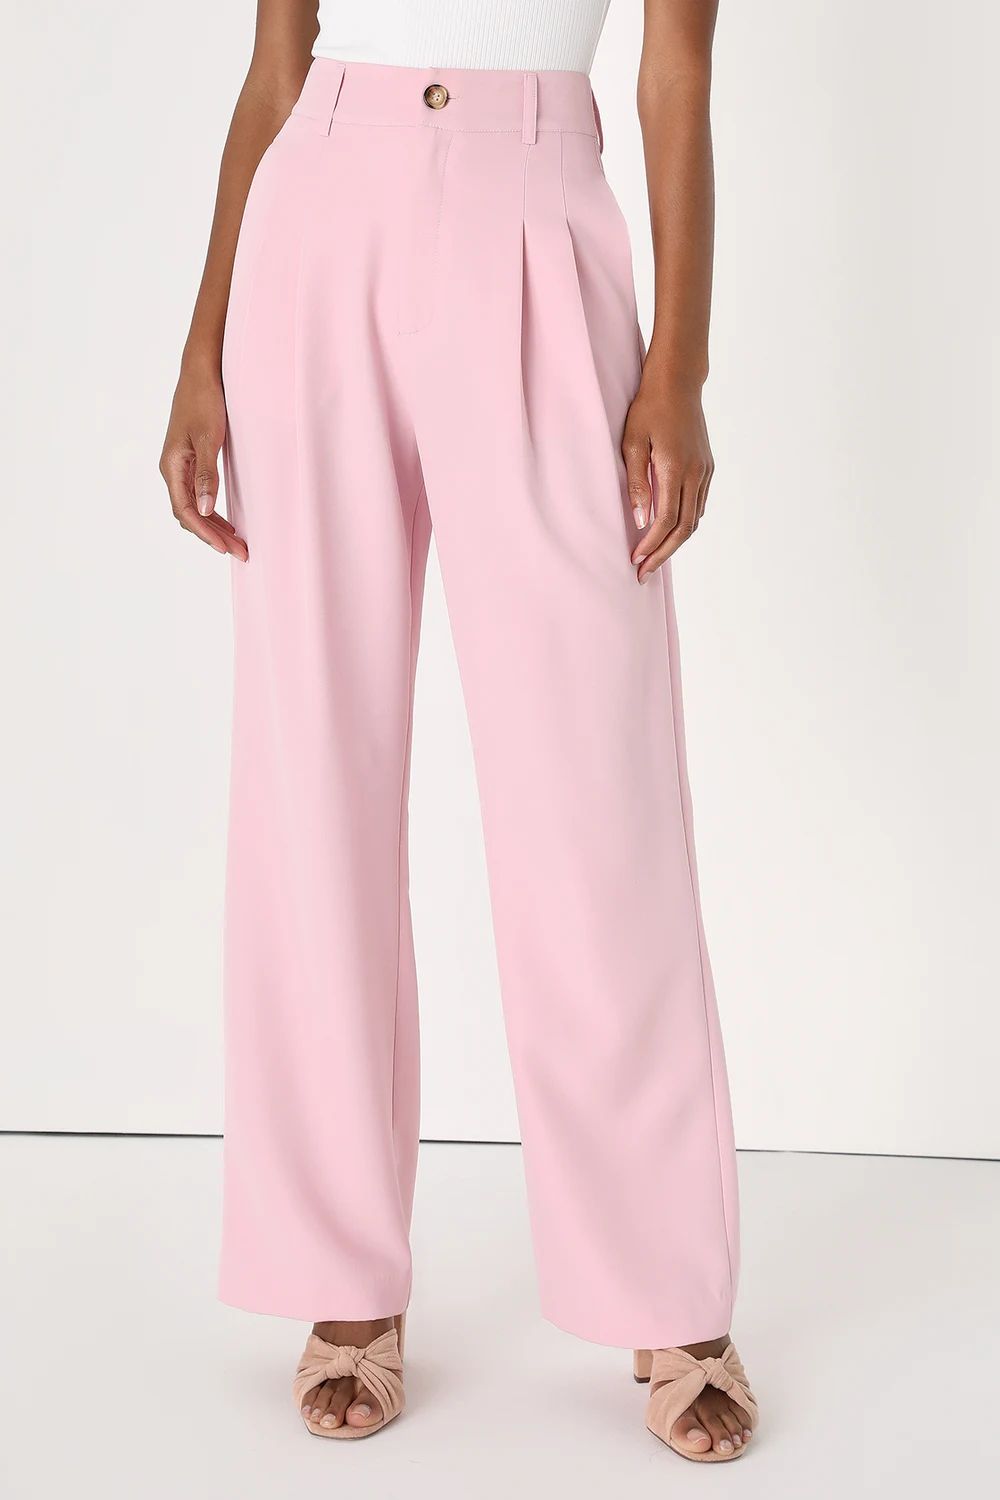 Make it Sophisticated Light Pink Wide-Leg Trouser Pants | Lulus (US)